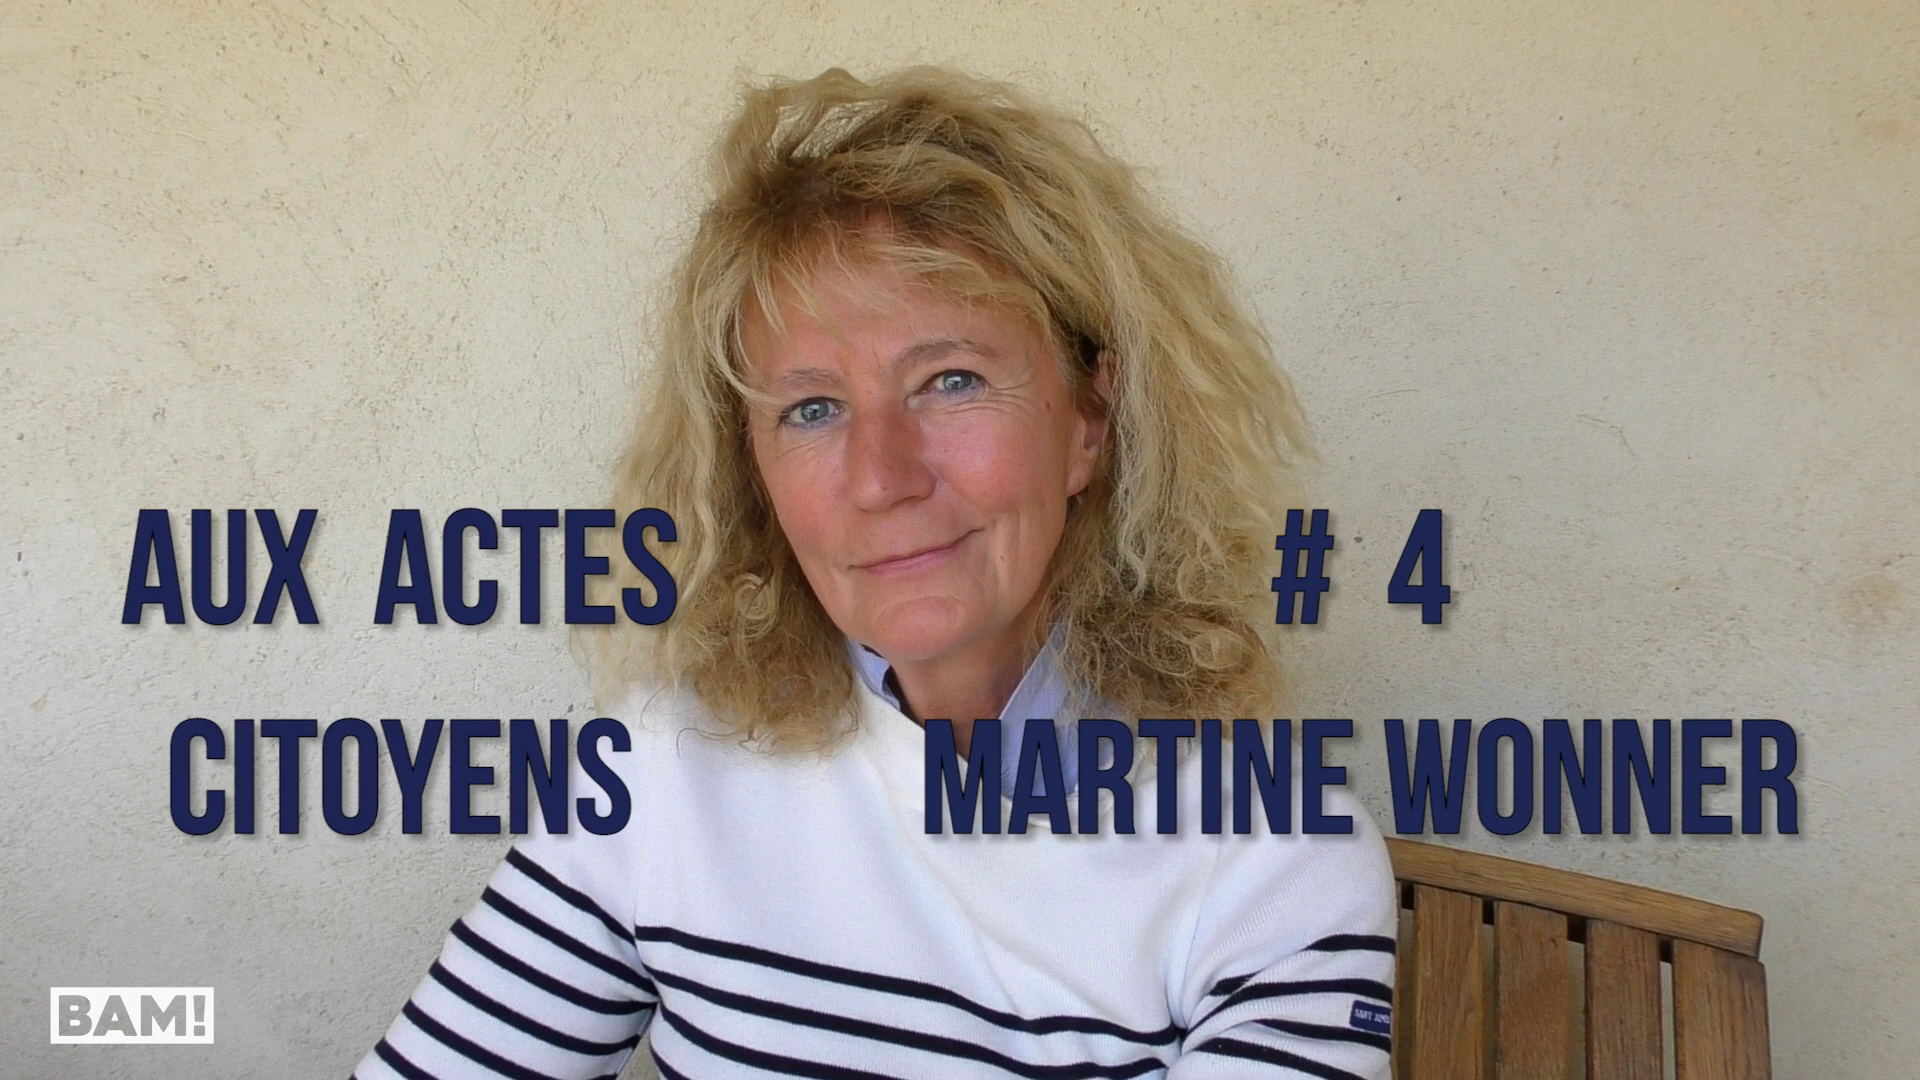 AUX ACTES CITOYENS # 4 MARTINE WONNER